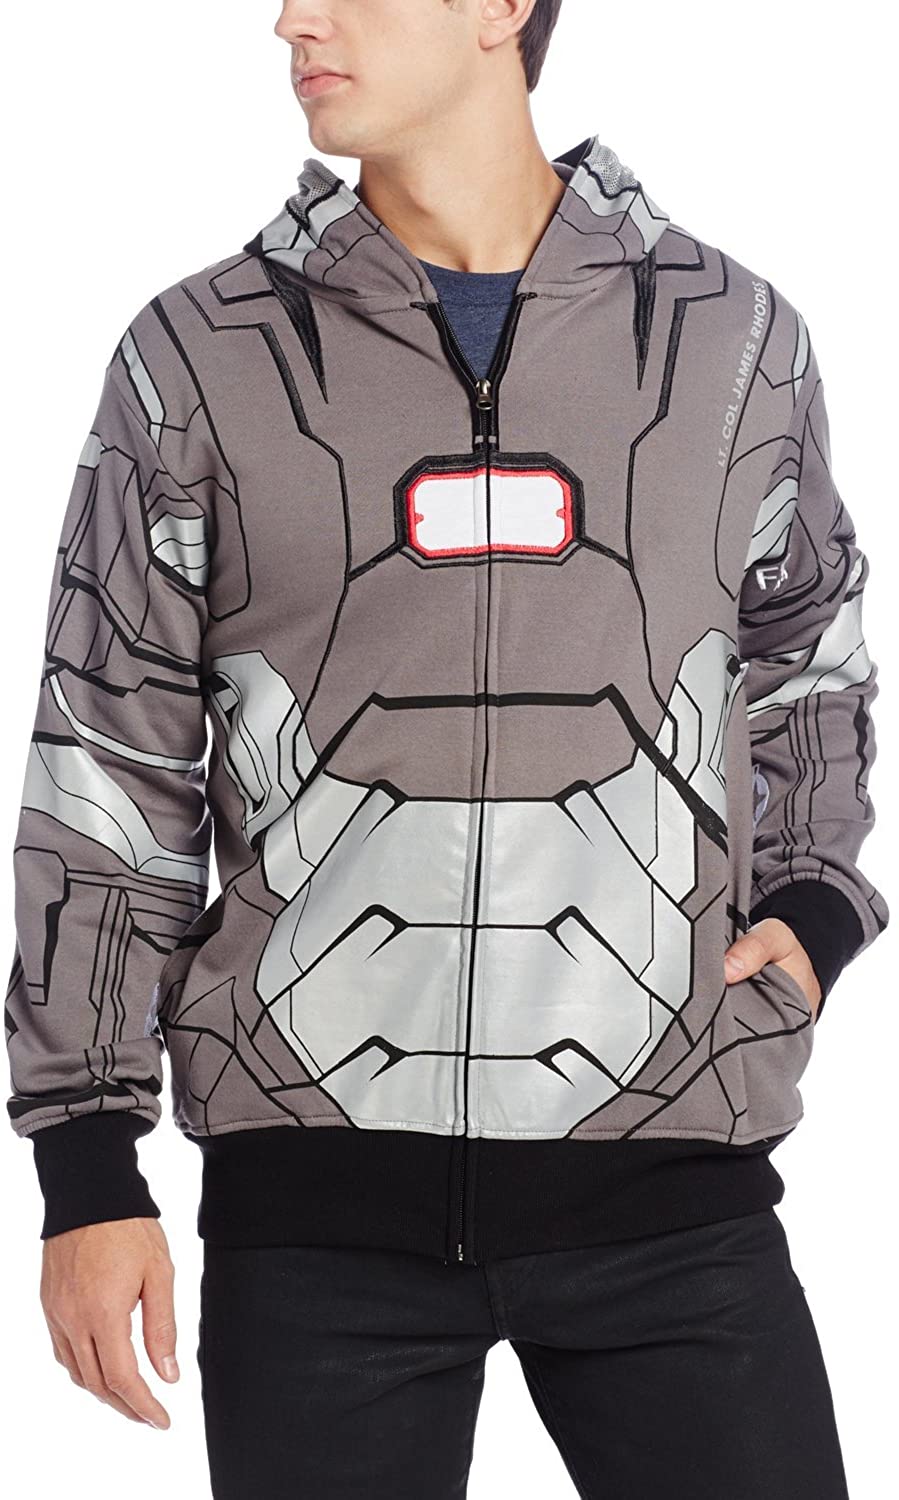 Iron Man Men's Adult Small War Machine Hooded Sweatshirt Jacket